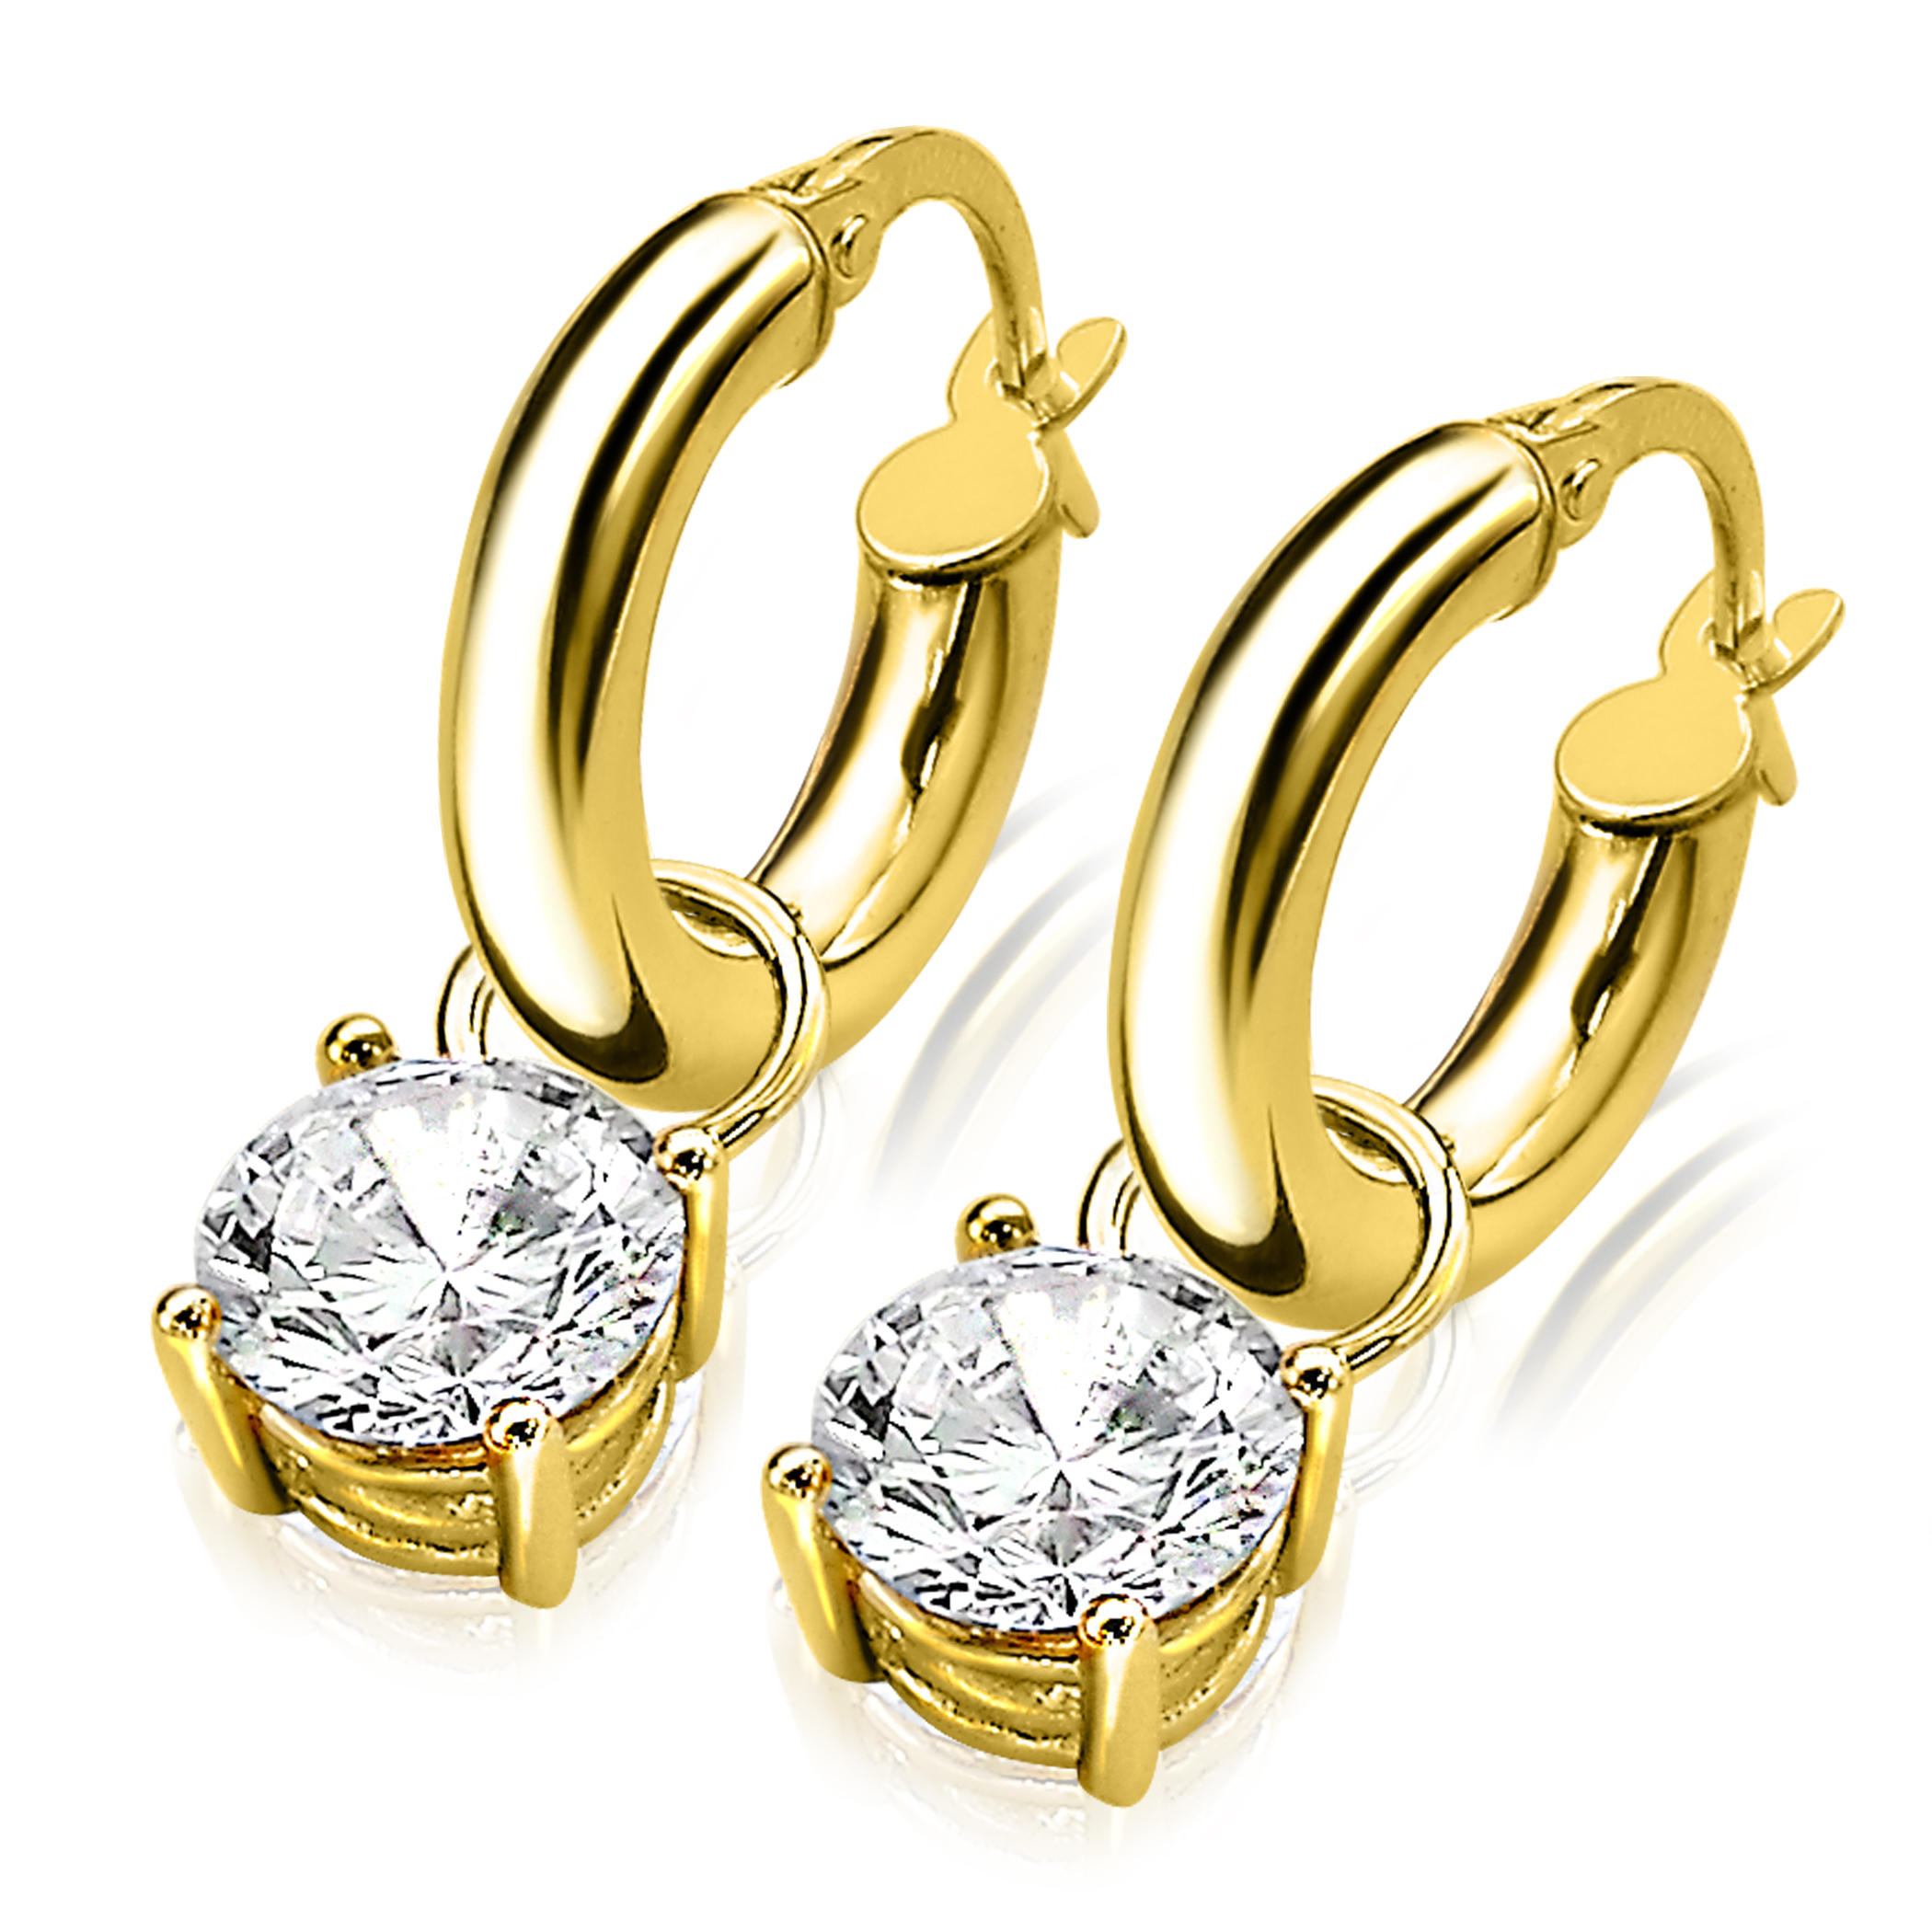 ZINZI 14K Gold Earrings Pendants Round White ZGCH143 (excl. hoop earrings)